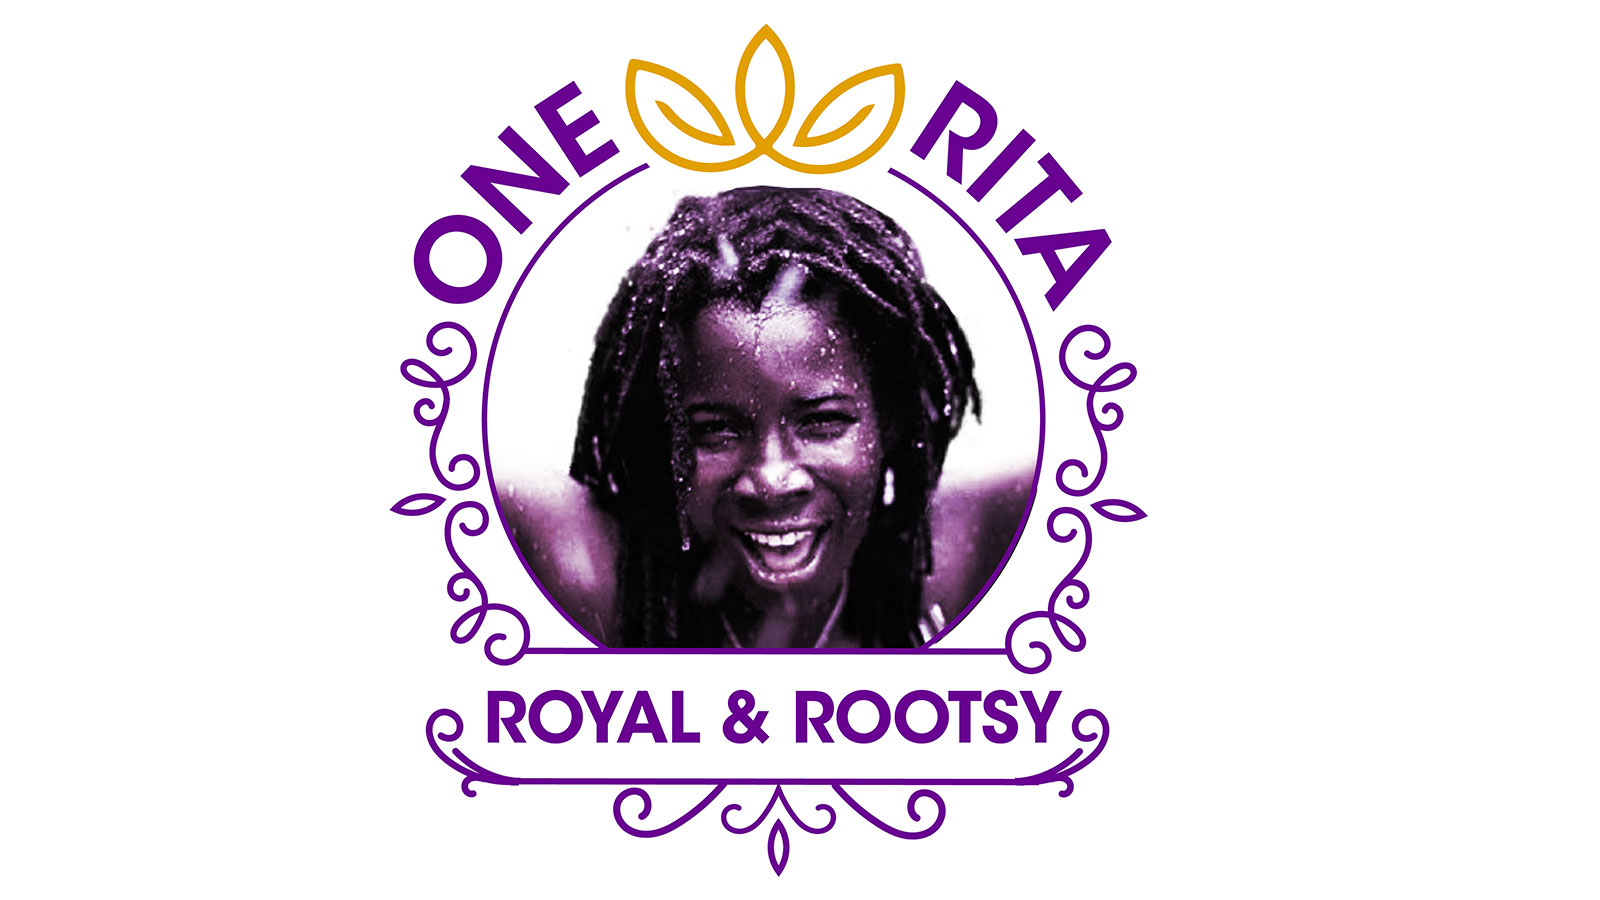 One Rita Royal & Rootsy